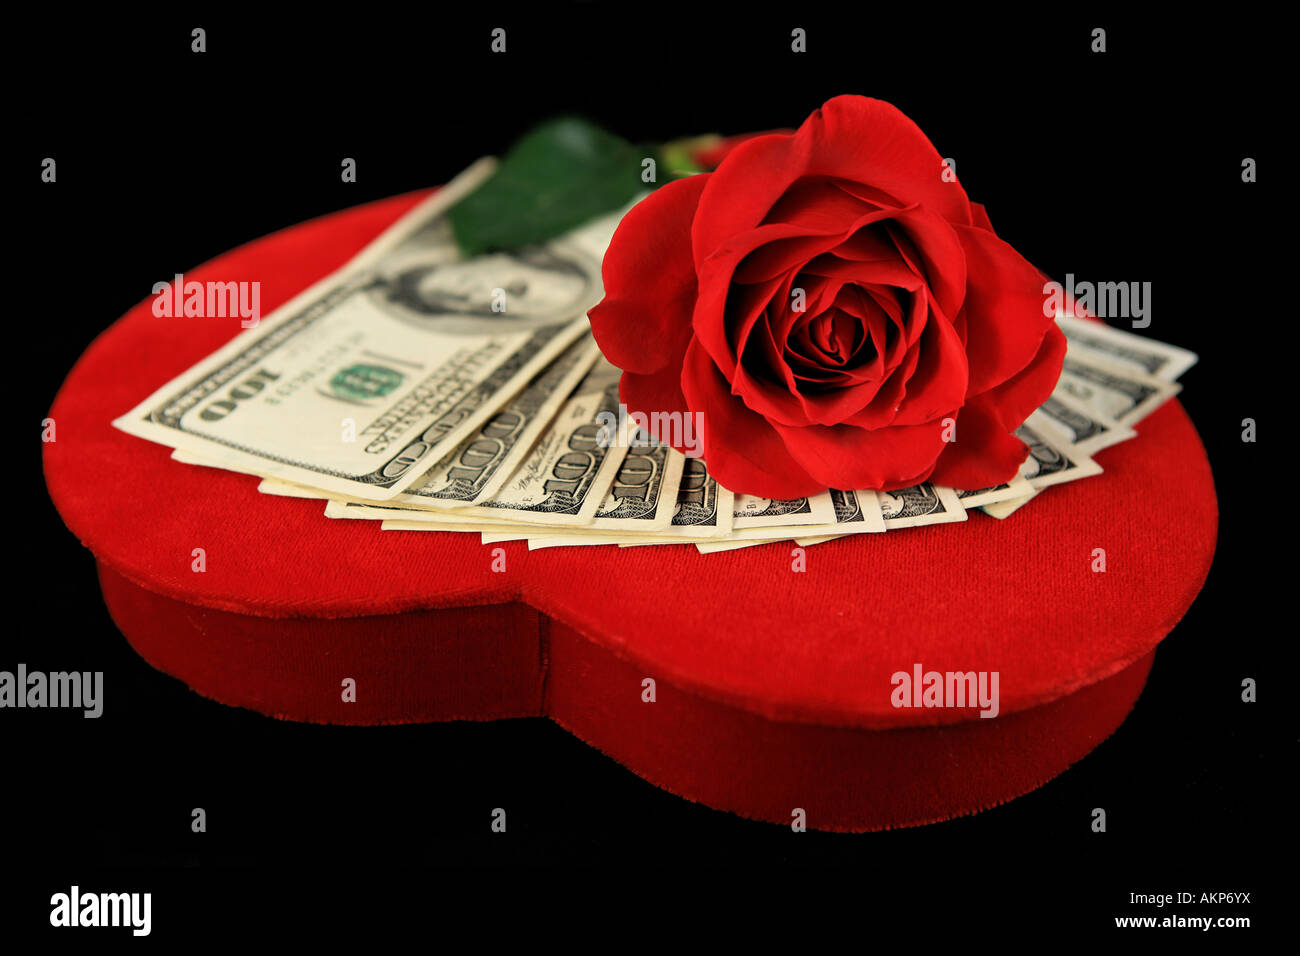 One Hundred dollar bills on red velvet Valentine heart with red rose isolated on black Stock Photo